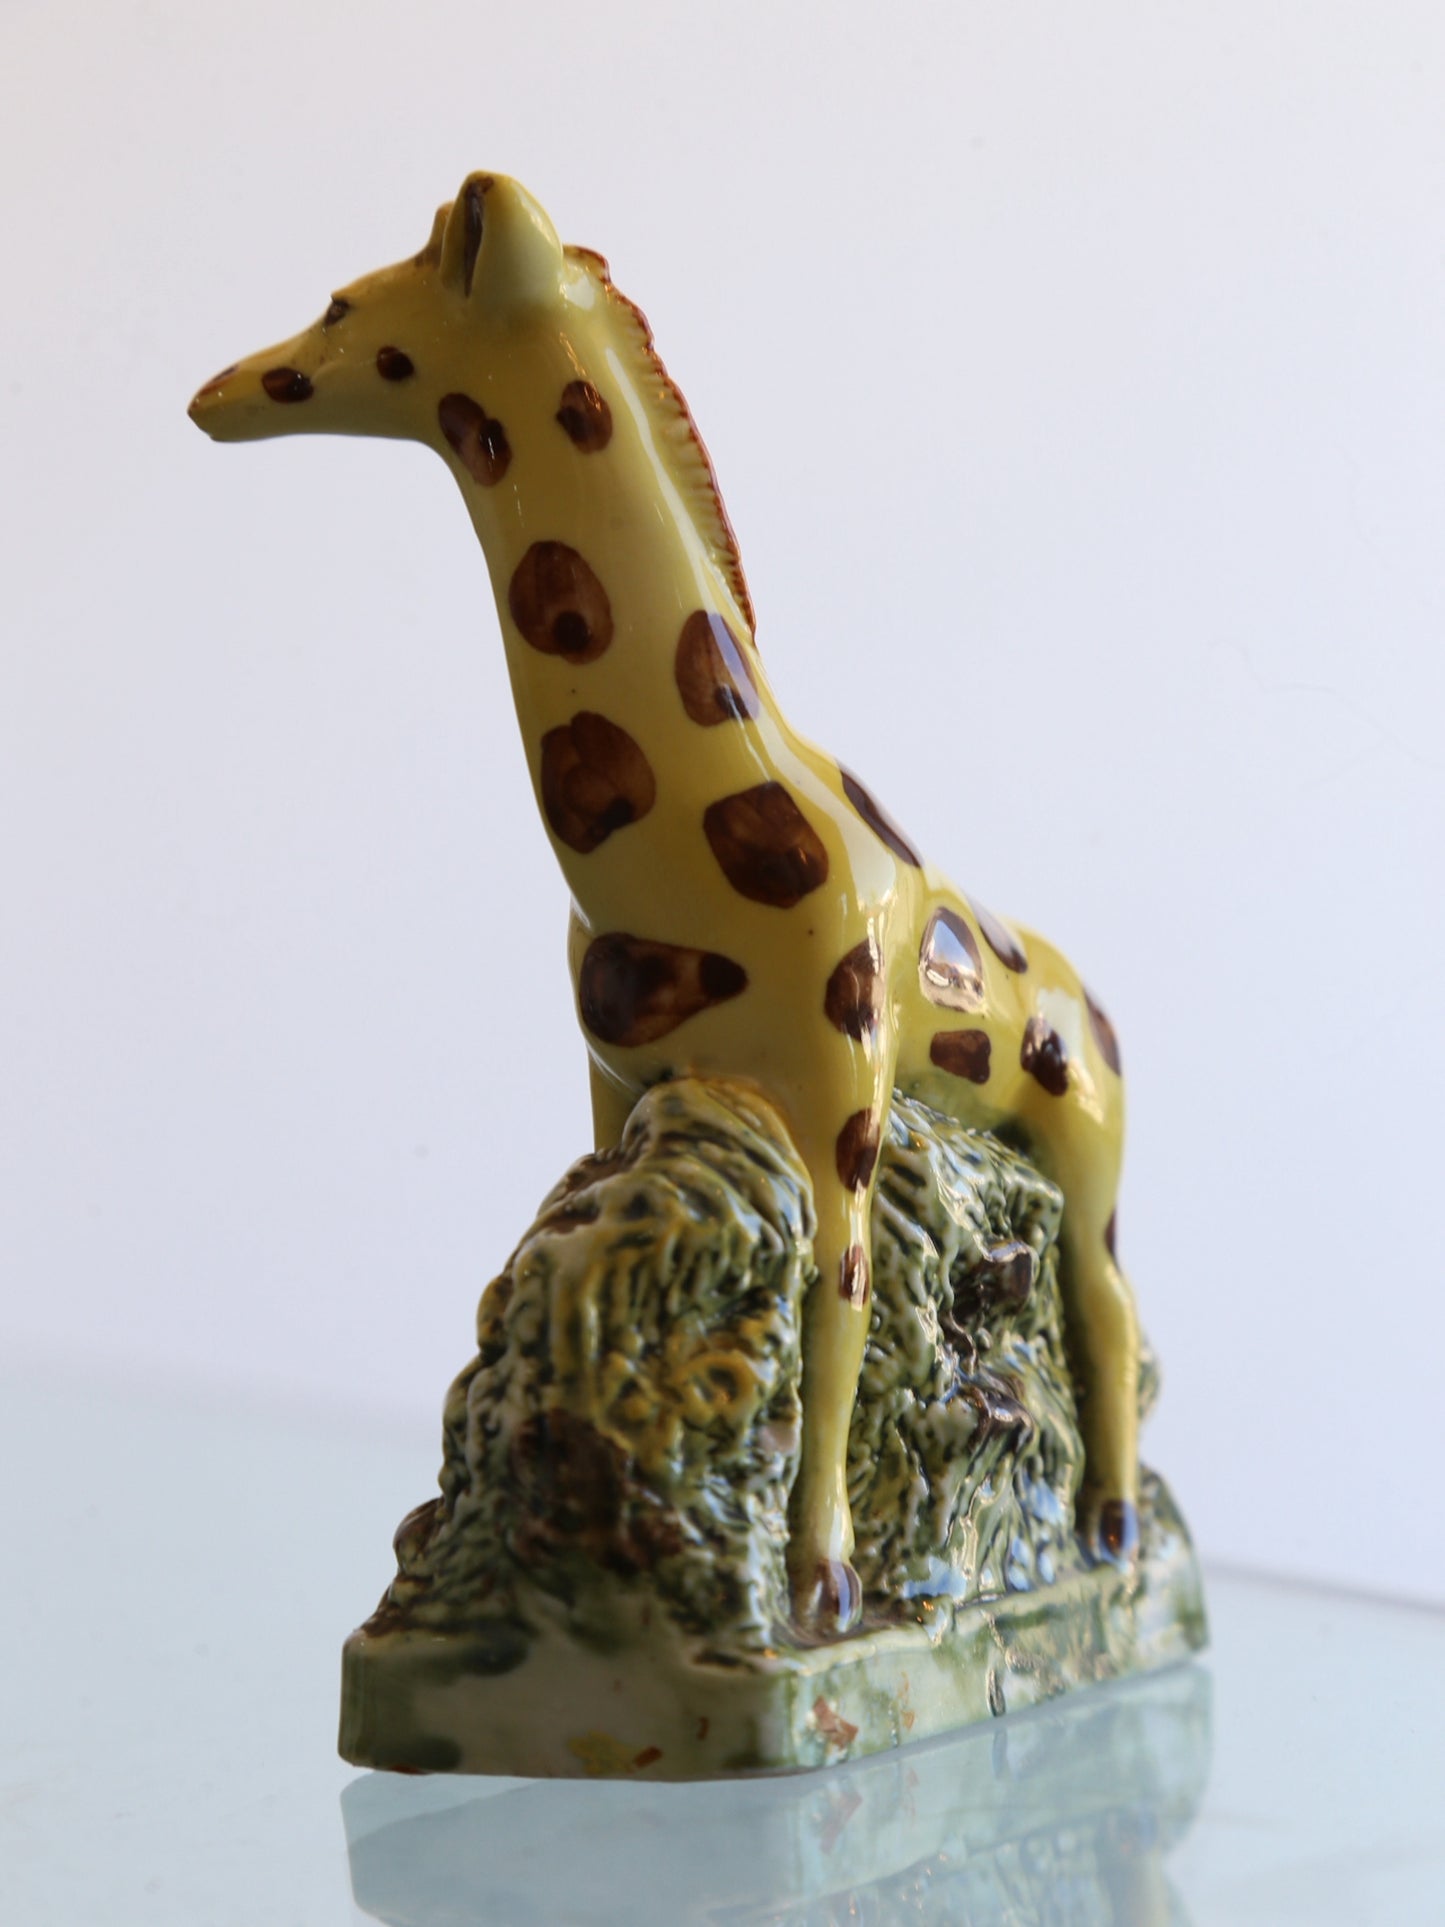 Cantine Duca D'asti Italian Animal Sculpture Set, 1973